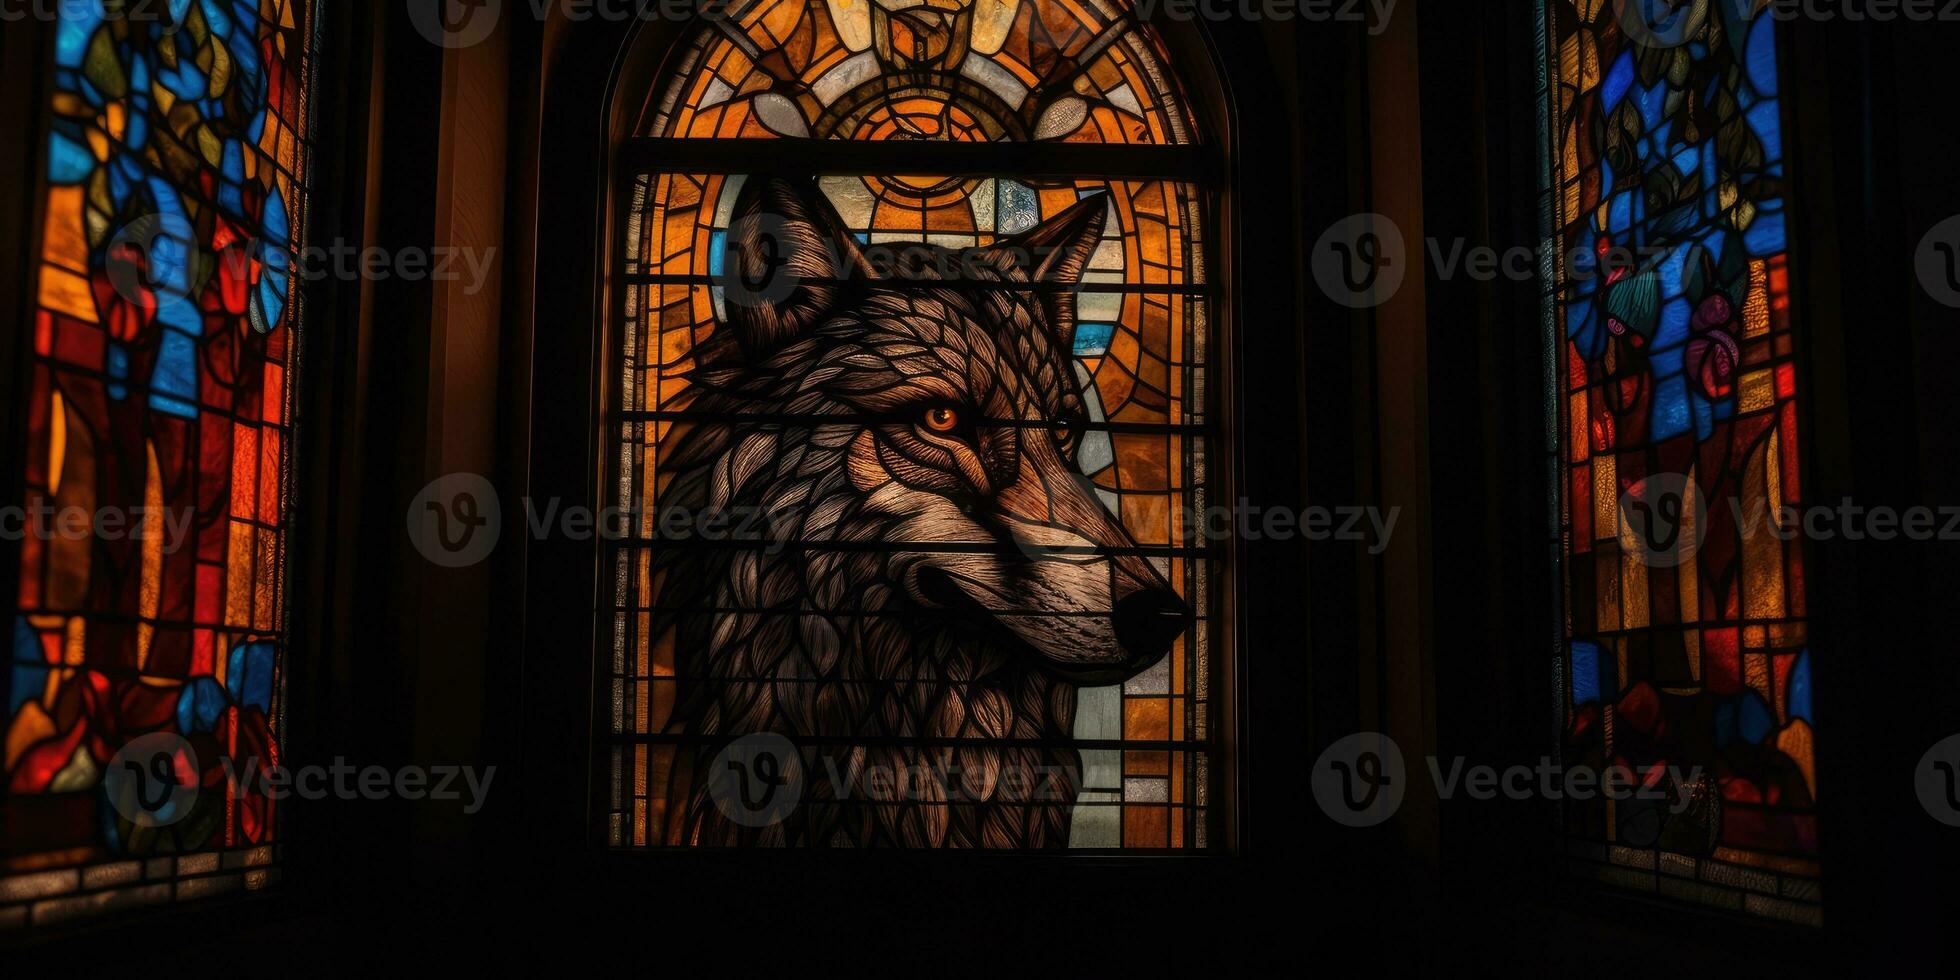 lobo manchado vaso ventana mosaico religioso collage obra de arte retro Clásico texturizado religión foto